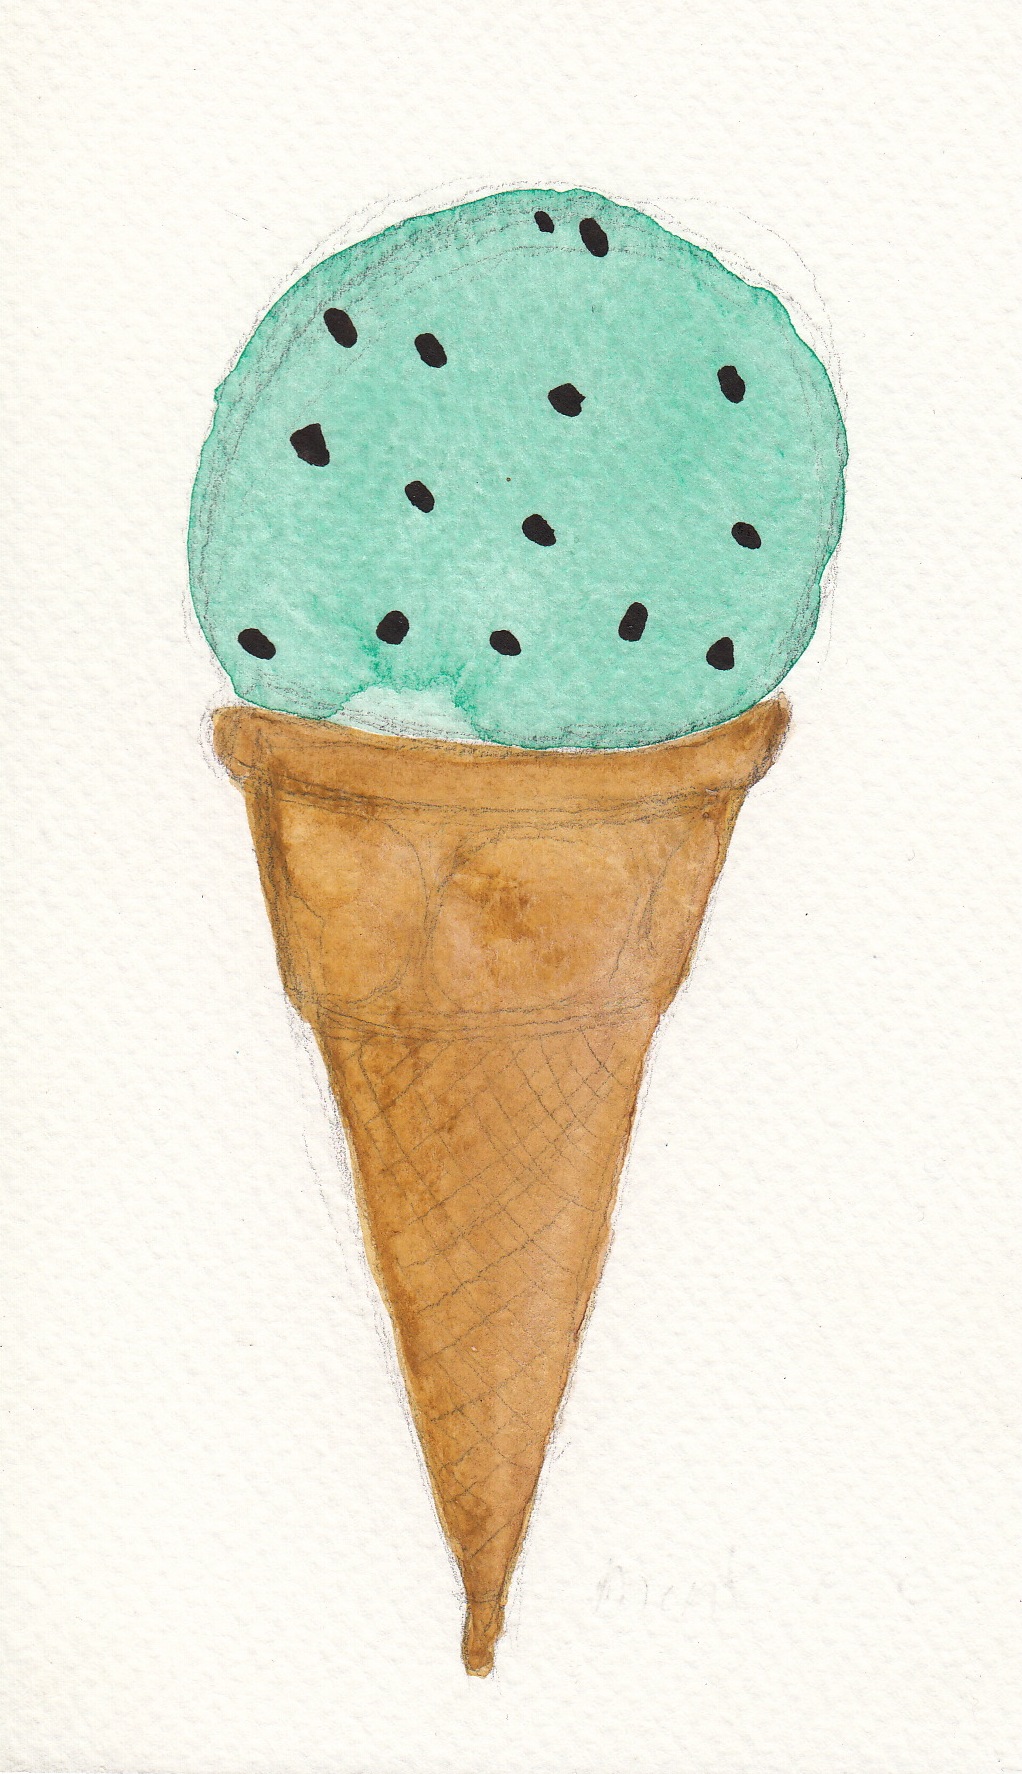 Mint choc chip ice cream, by Marija Smits